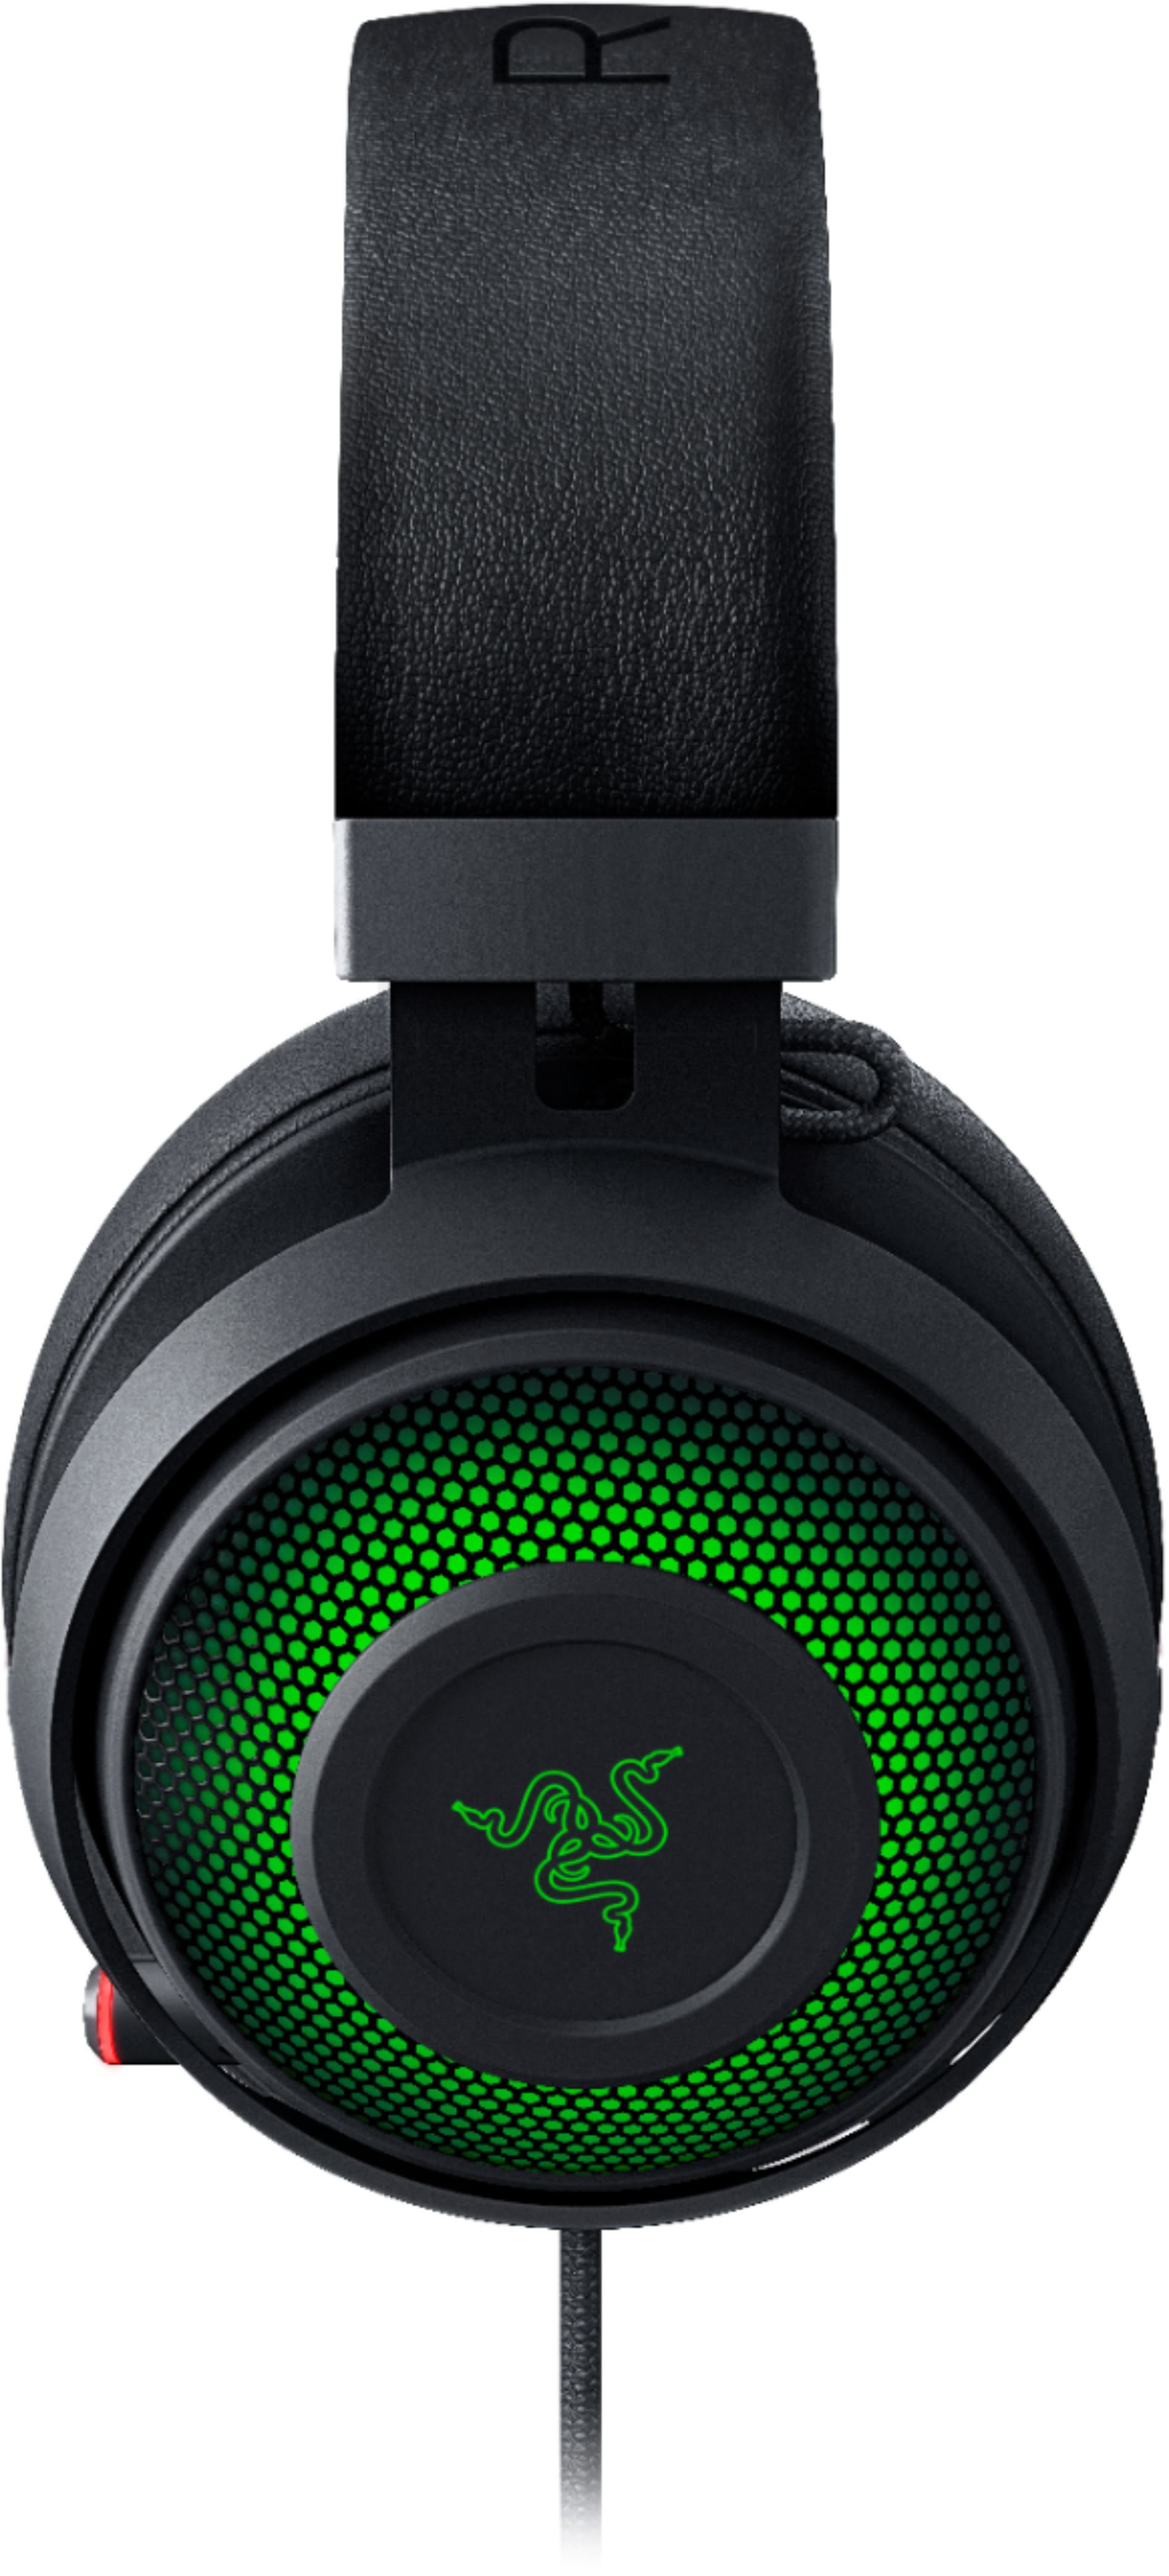 Razer Kraken Ultimate Wired Thx Spatial Audio Gaming Headset For Pc With Rgb Lighting Classic Black Rz04 R3u1 Best Buy